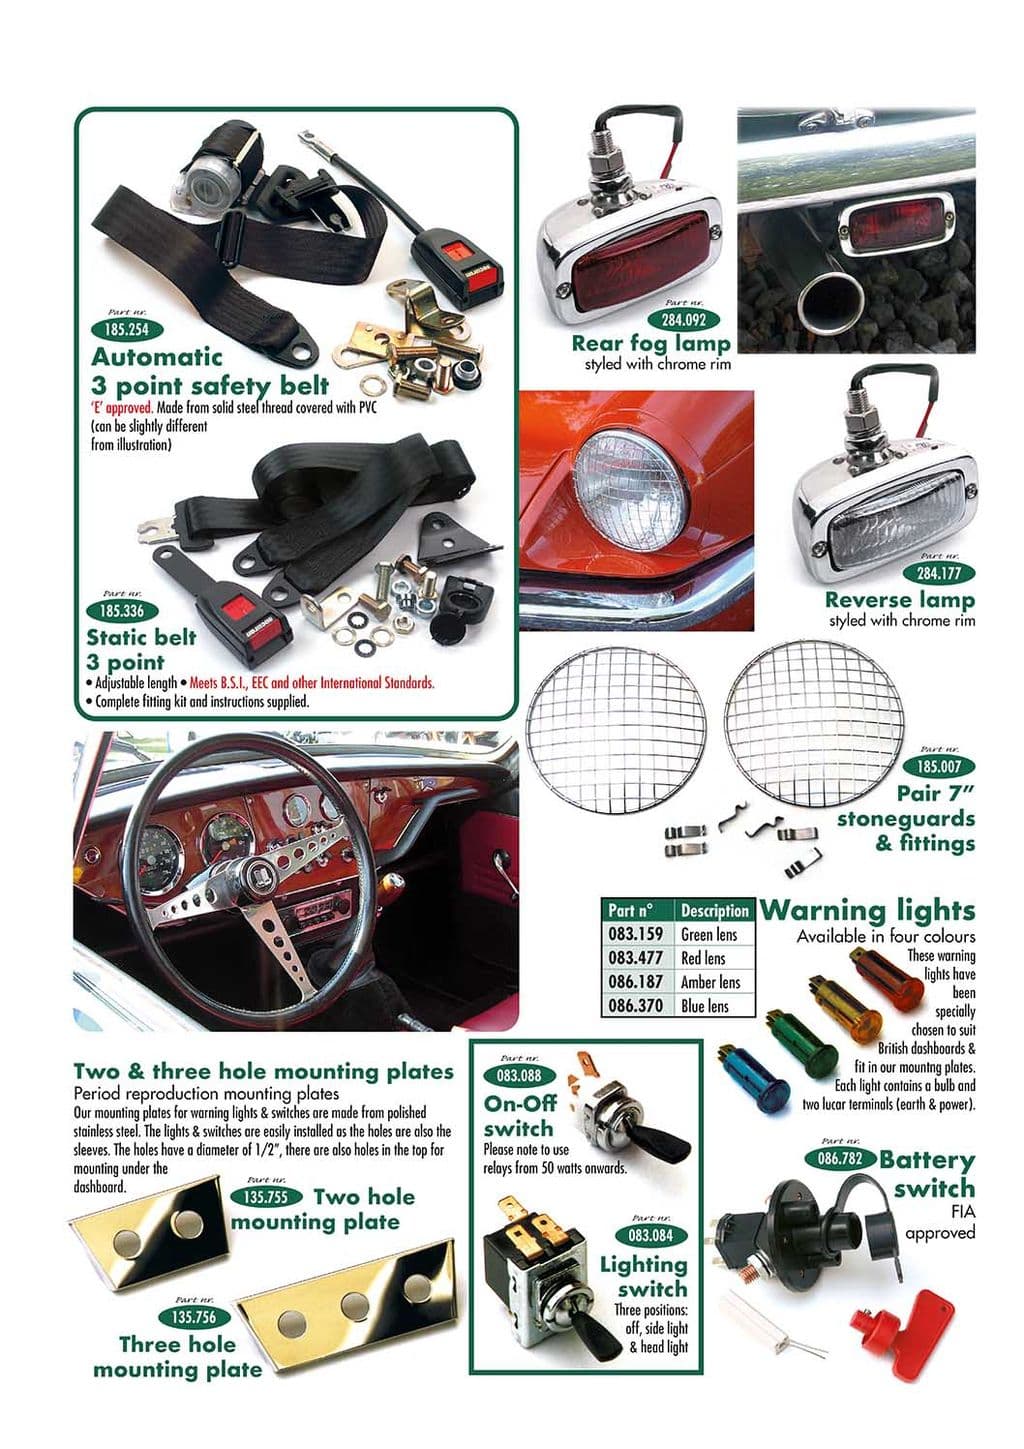 Safety parts & accessories - Safety parts - Maintenance & storage - Jaguar XJ6-12 / Daimler Sovereign, D6 1968-'92 - Safety parts & accessories - 1